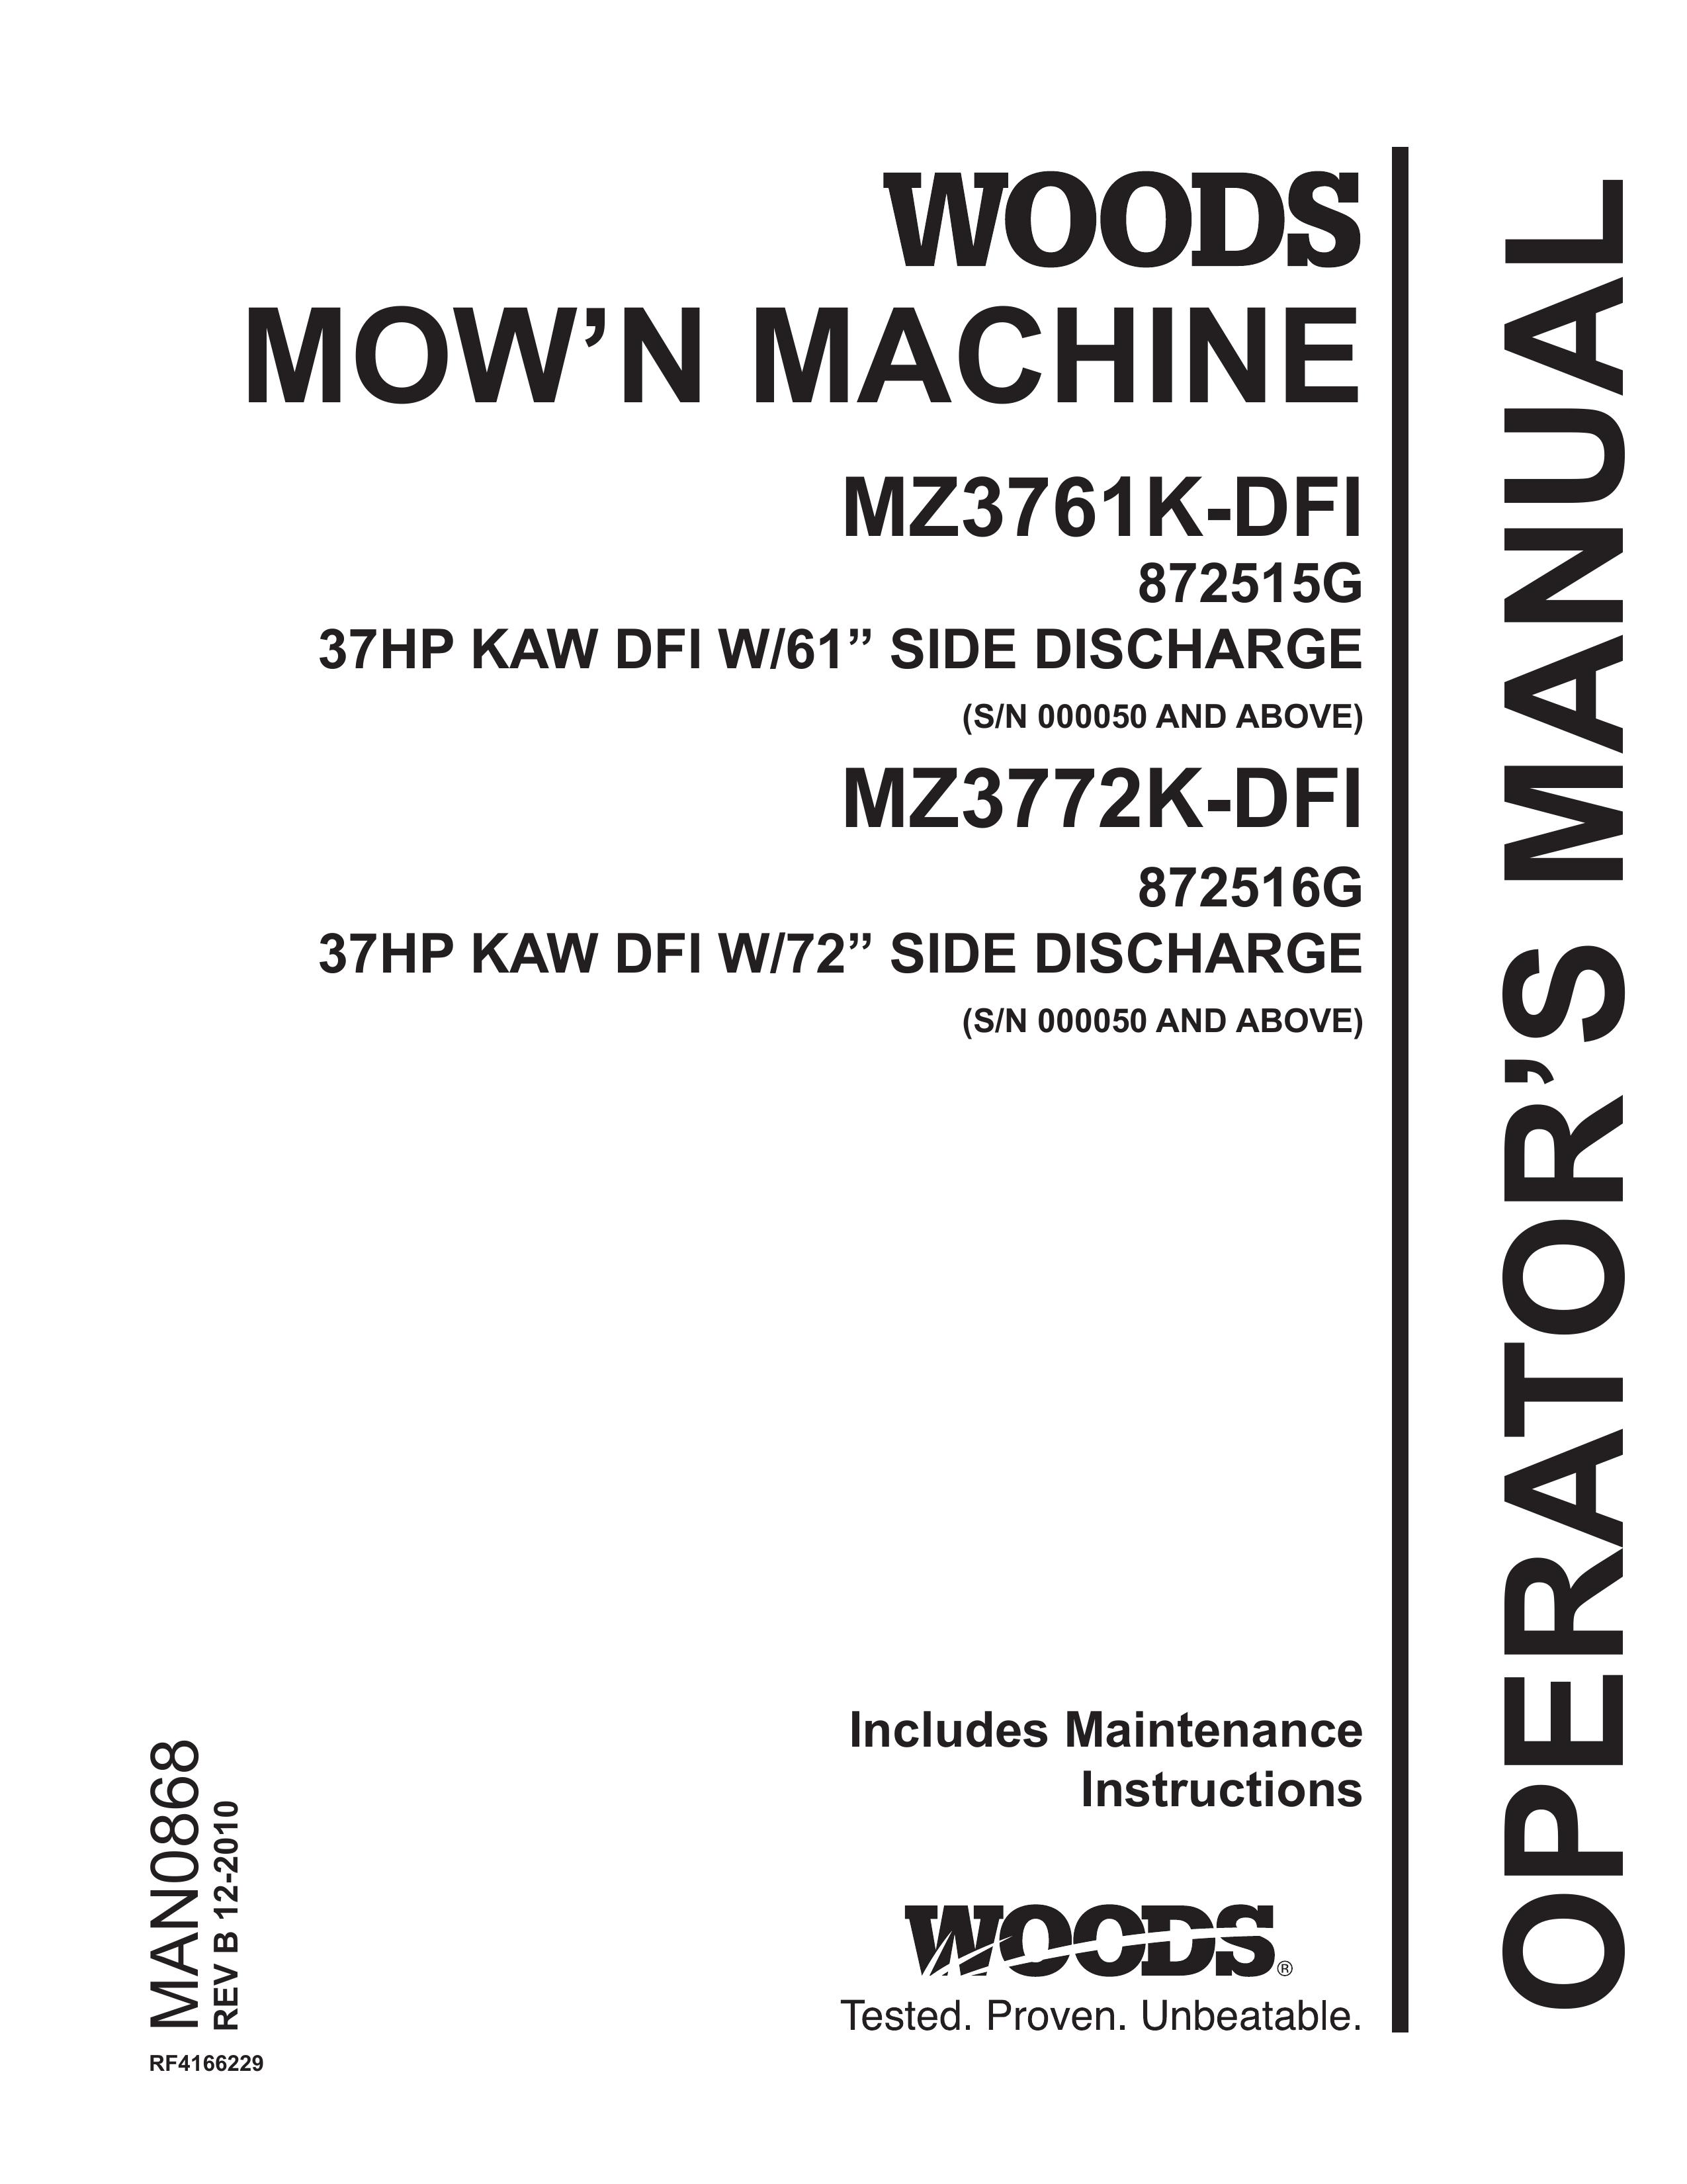 Woods Equipment MZ3772K-DFI Lawn Mower User Manual